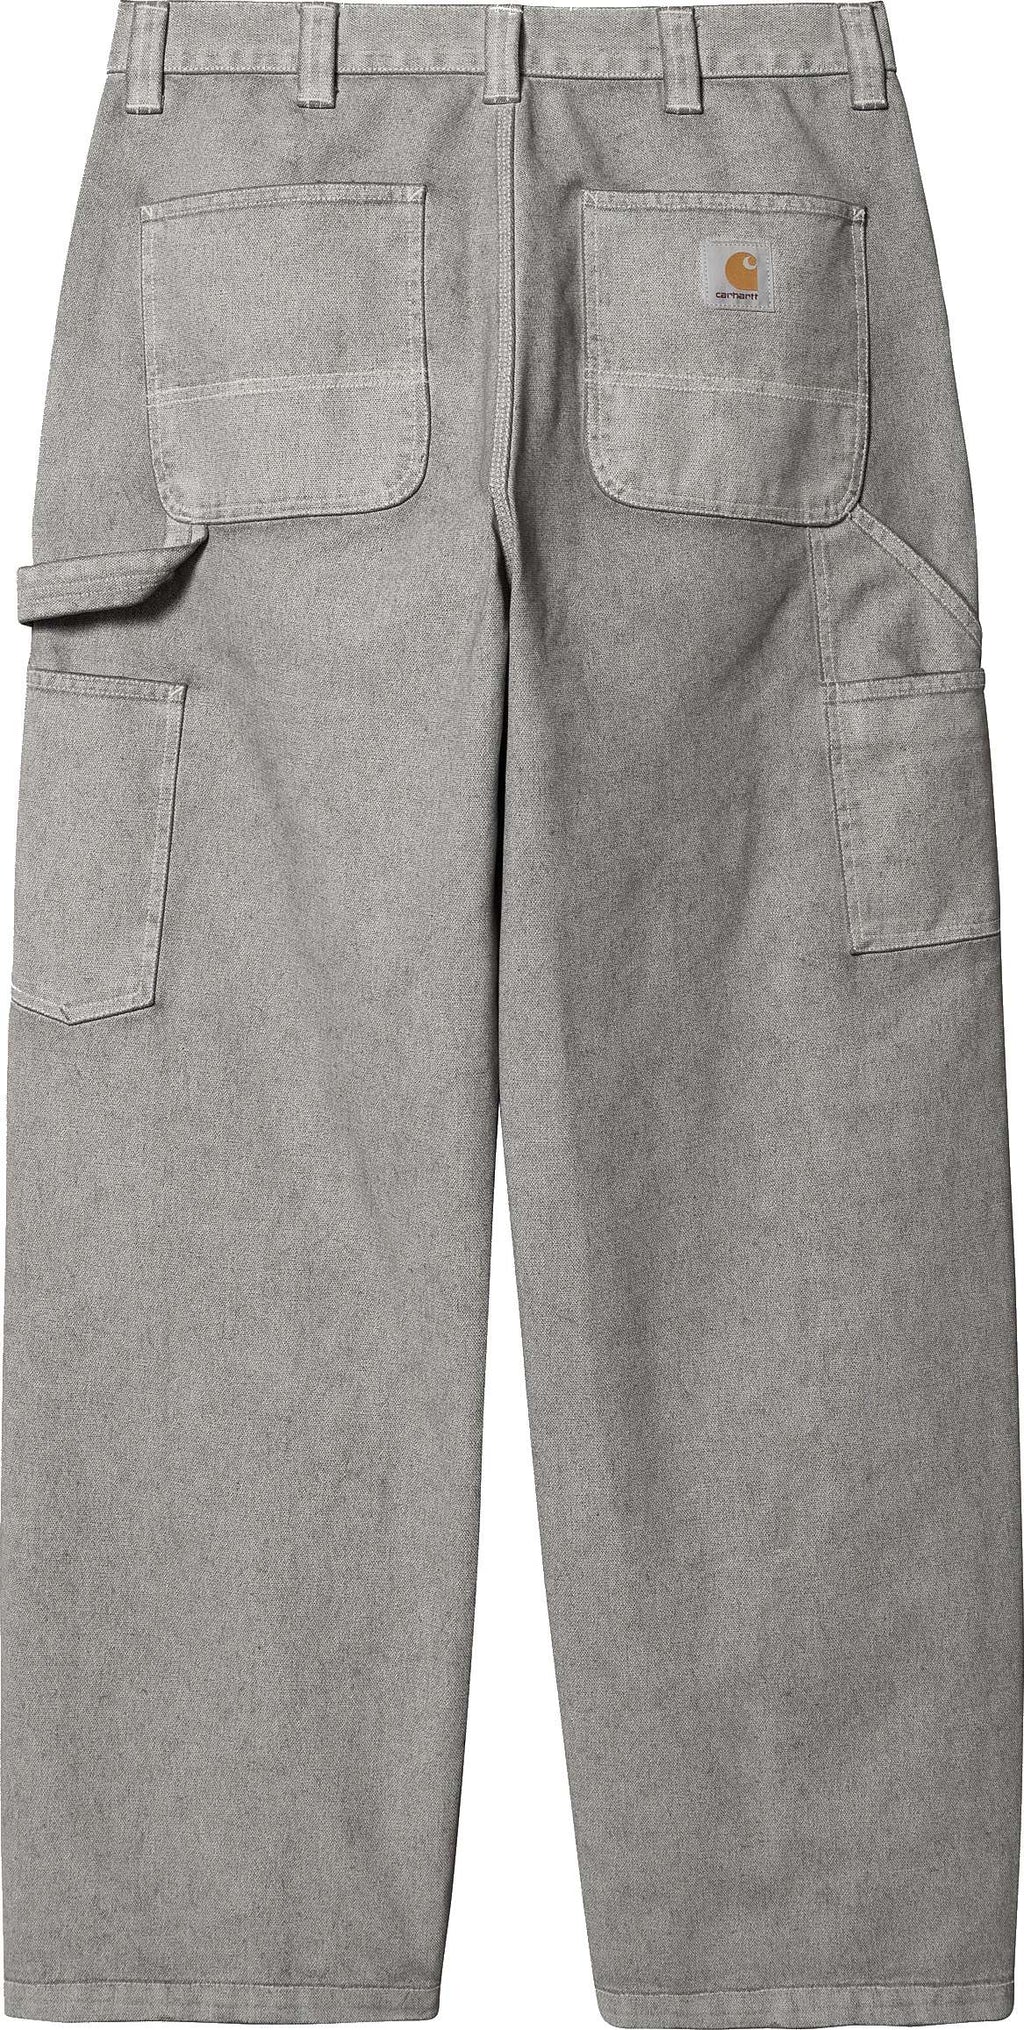  Carhartt Wip Jeans Og Single Knee Pant Blacksmith Stone Washed Grigio Uomo - 1